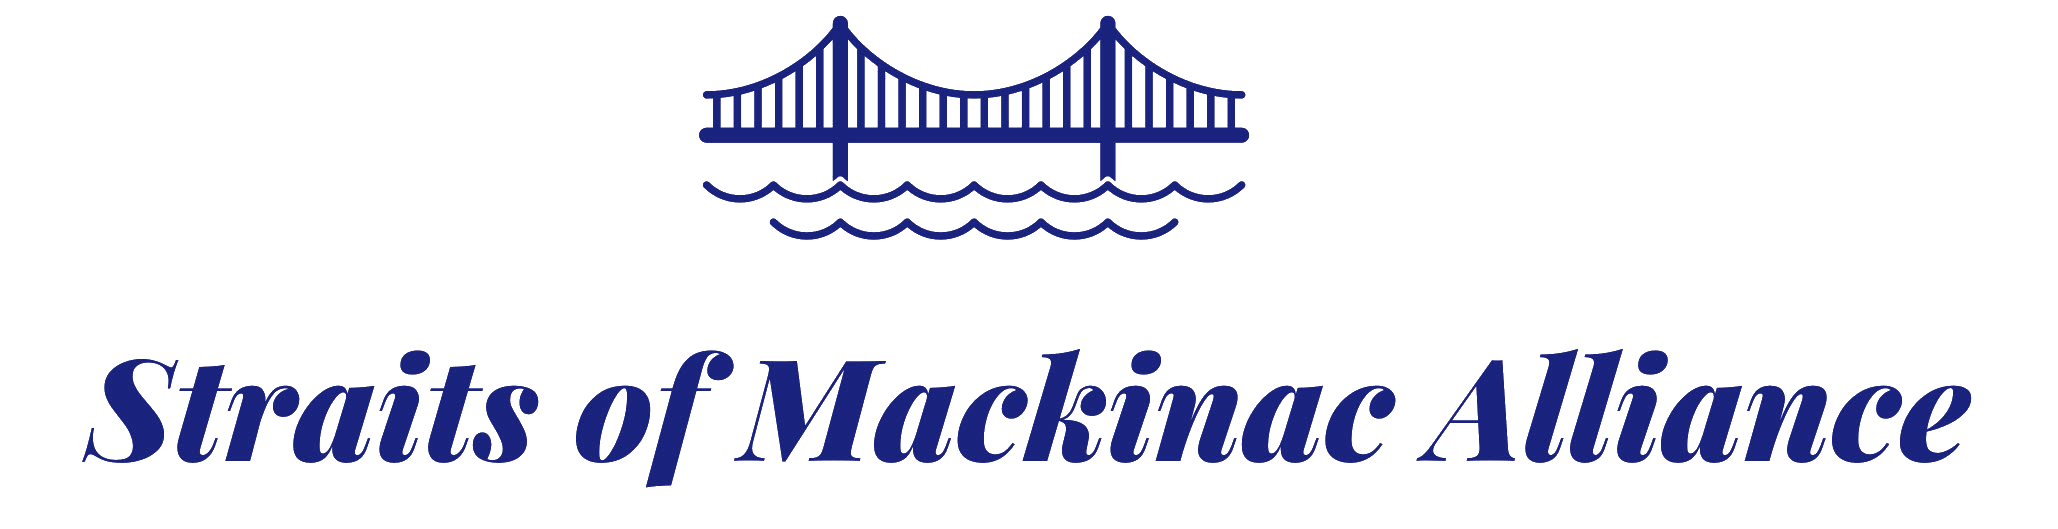 Straits of Mackinac Alliance